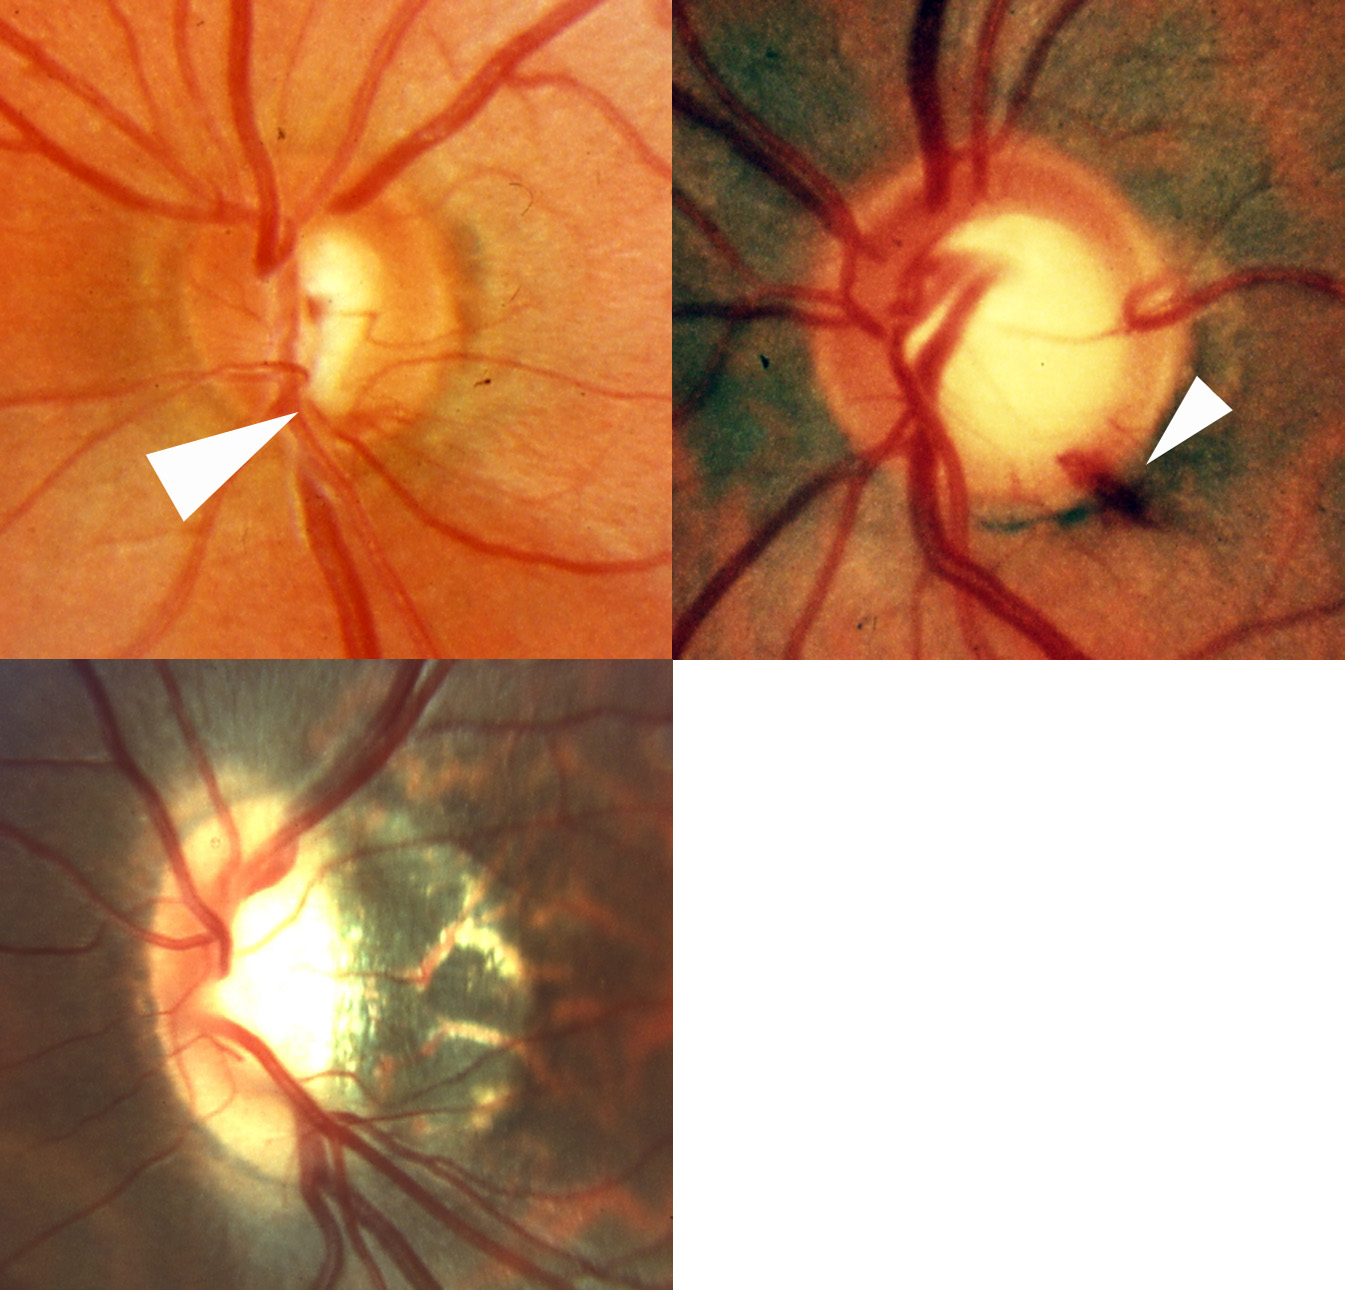 Optic nerve photographs